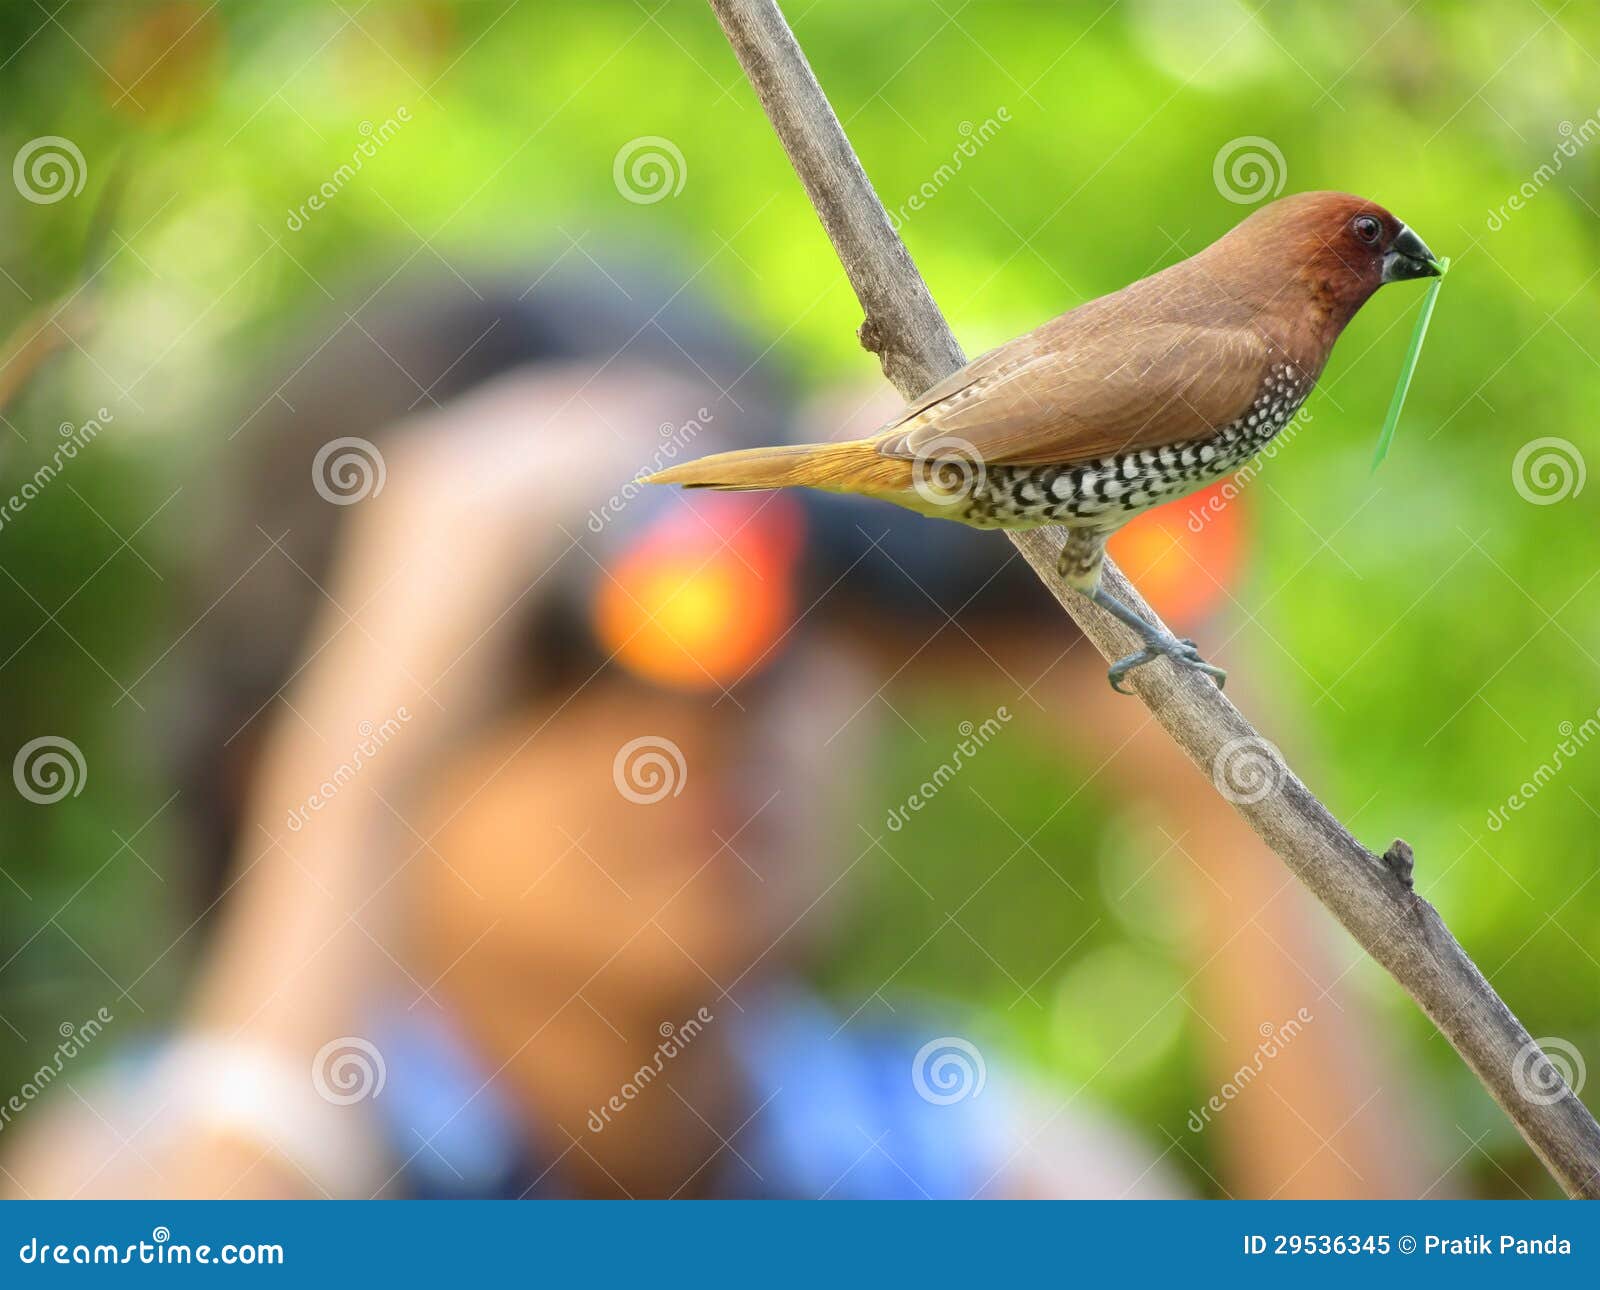 Bird watching stock image. Image of blurred, binoculars - 29536345